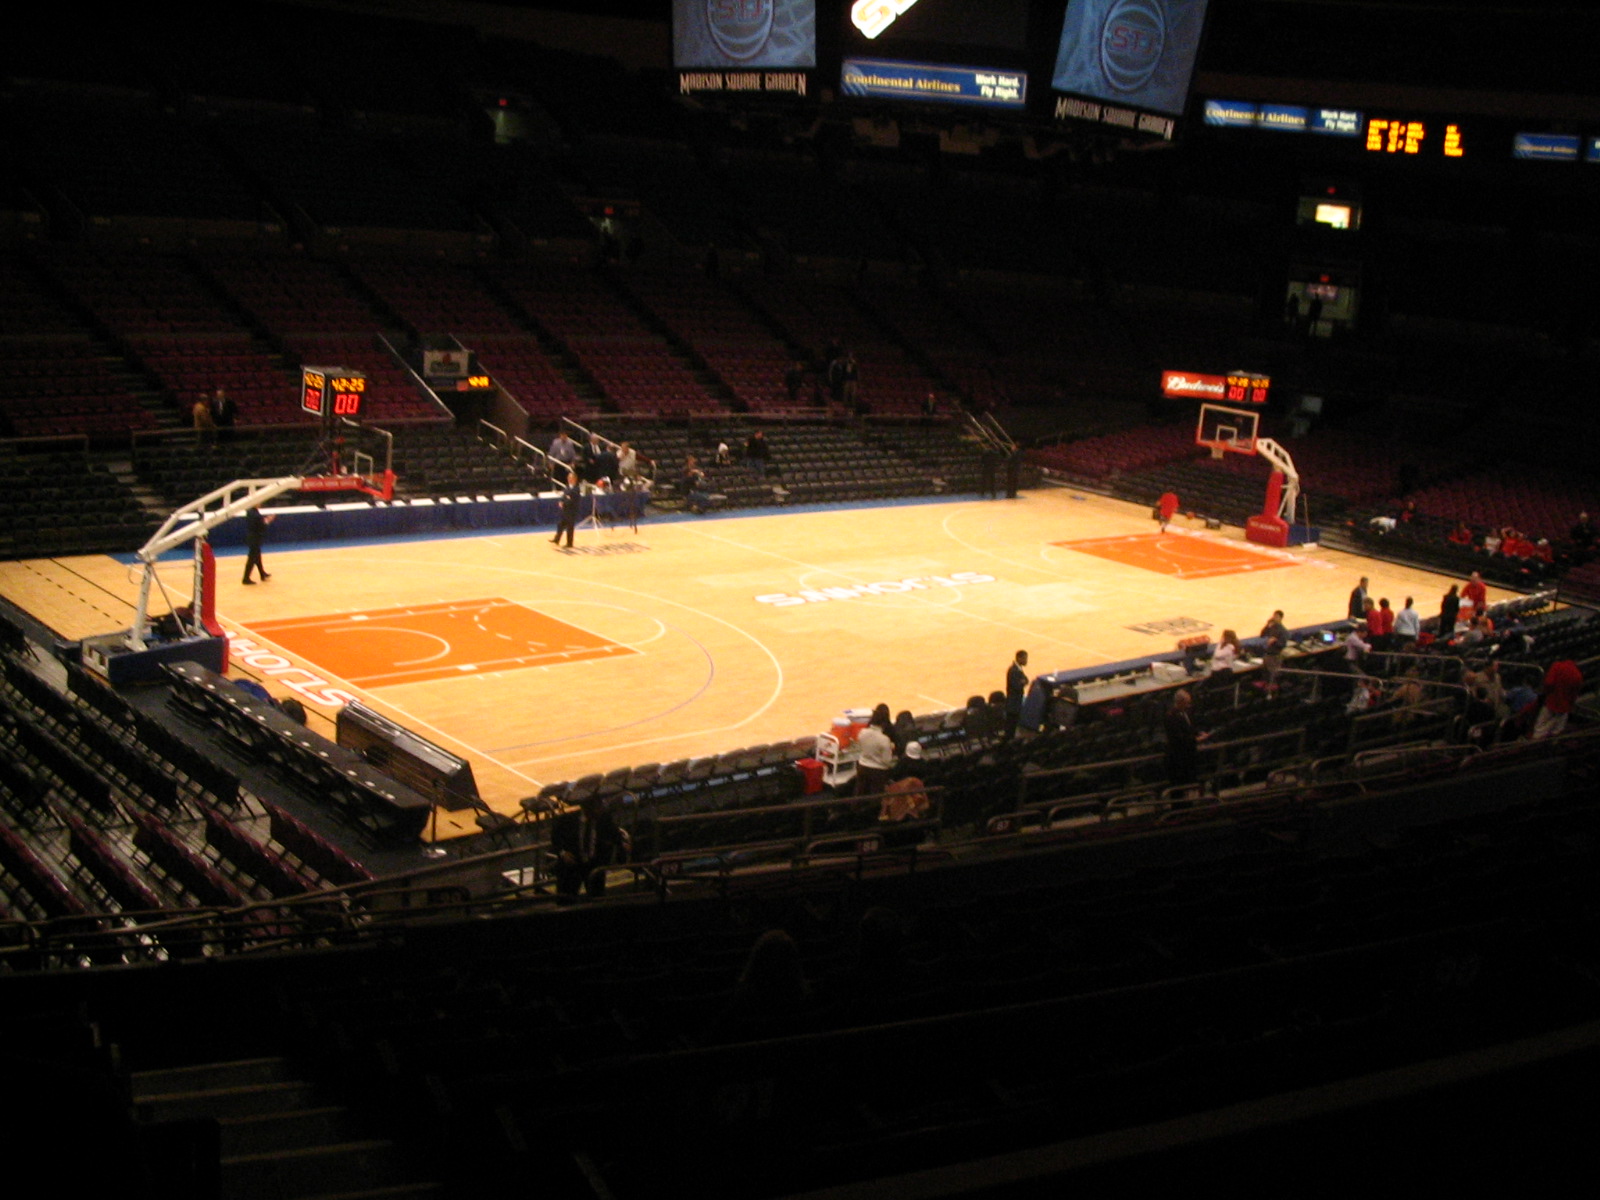 Madison. Square Garden empty basketball court